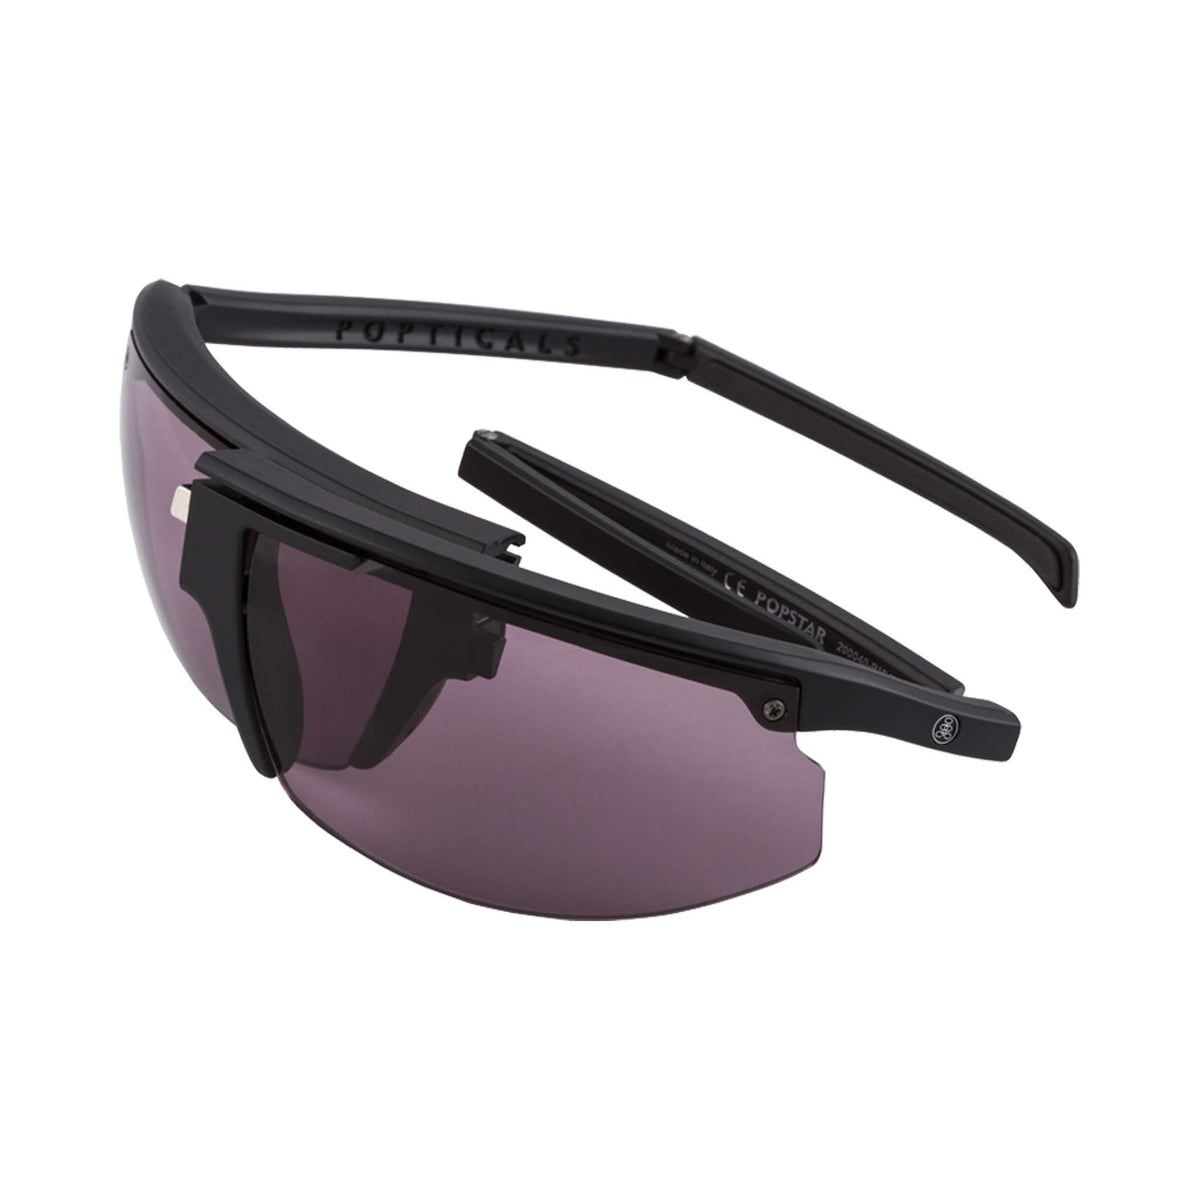 Popticals, Premium Compact Sunglasses, PopStar, 200040-BMVS, Standard Golf Sunglasses, Matte Black Frame, Violet Golf Lenses, Spider View